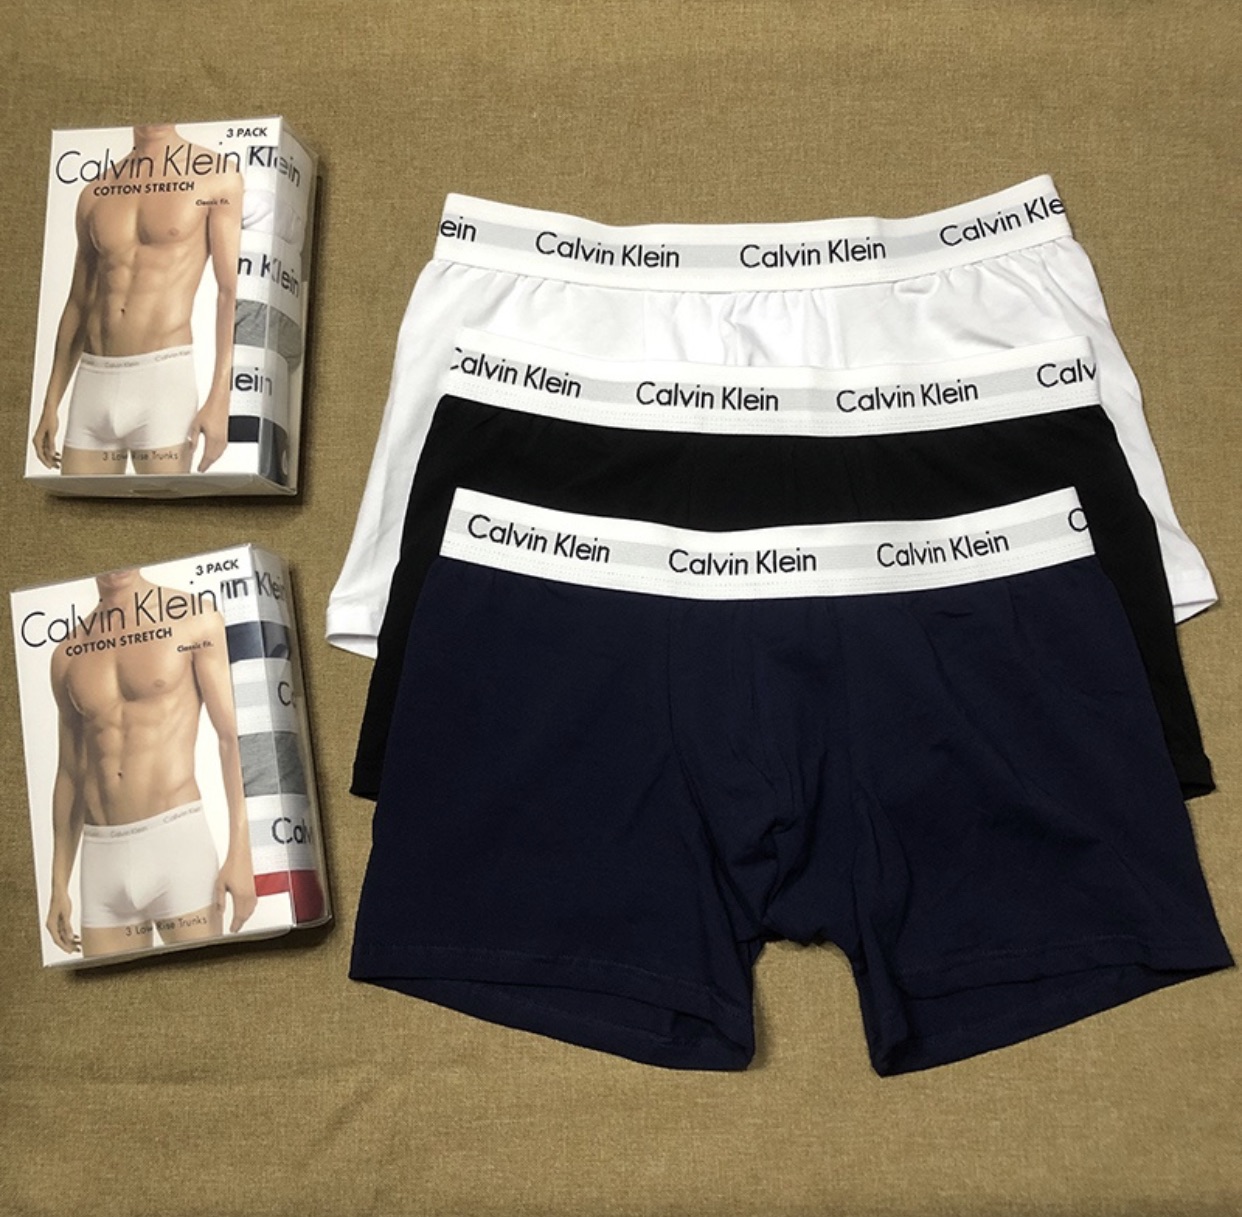 Calvin Klein Cotton Stretch Underwear 3 Pieces Combo For Men - 3 Color  Options, Fashion